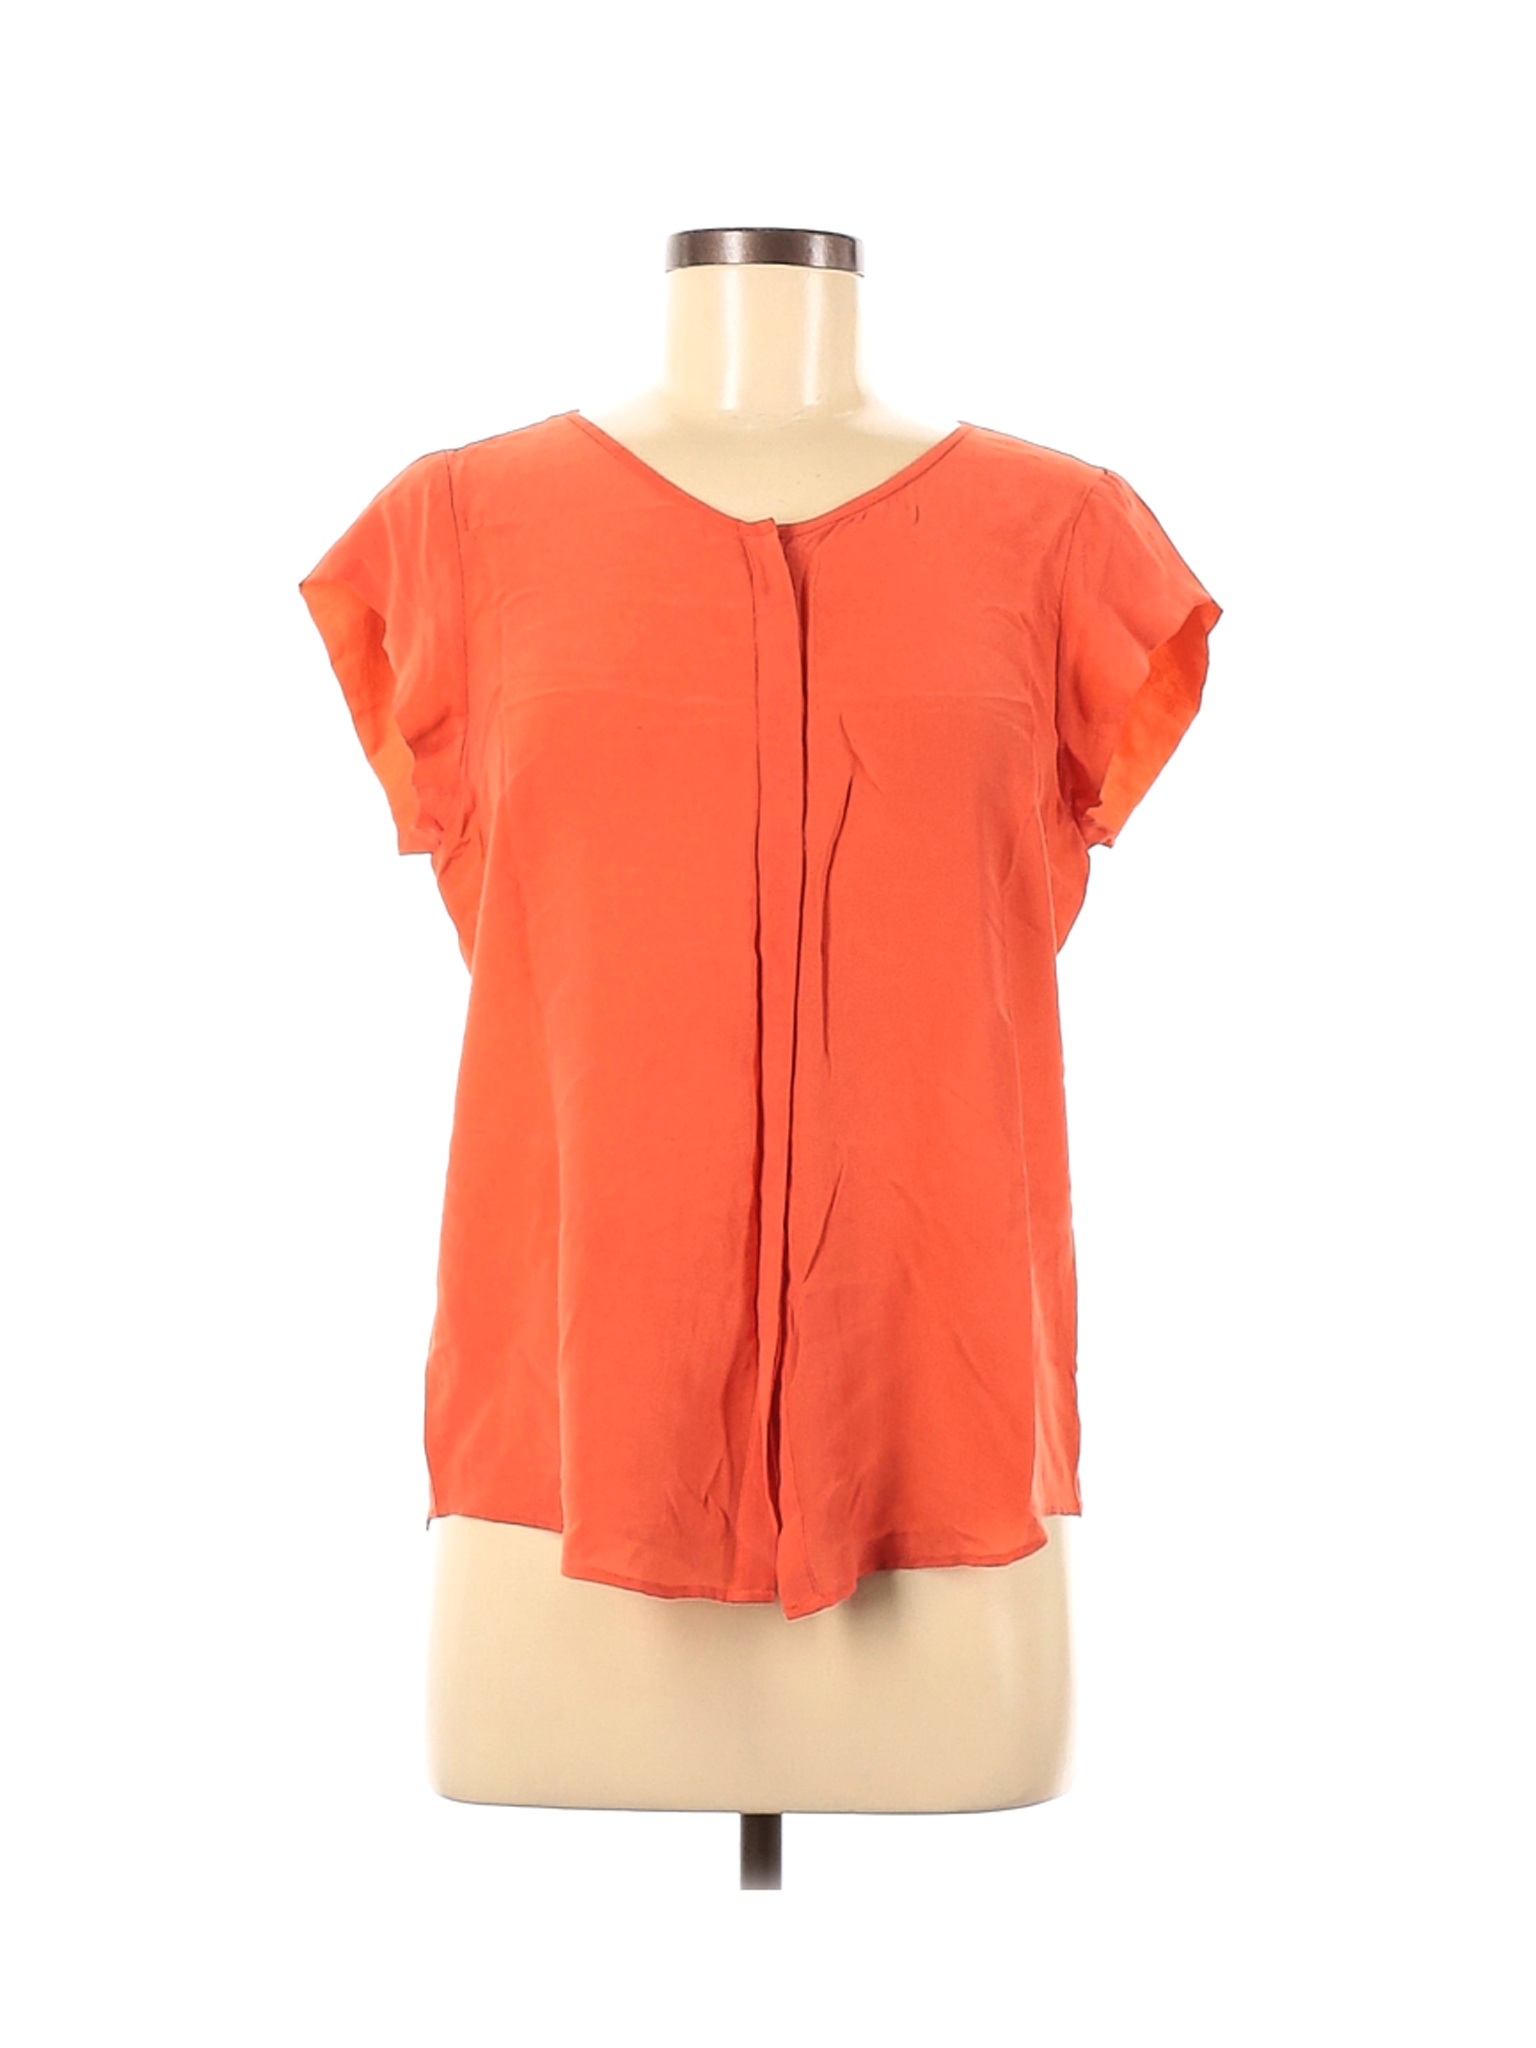 Joie Women Orange Short Sleeve Blouse M | eBay